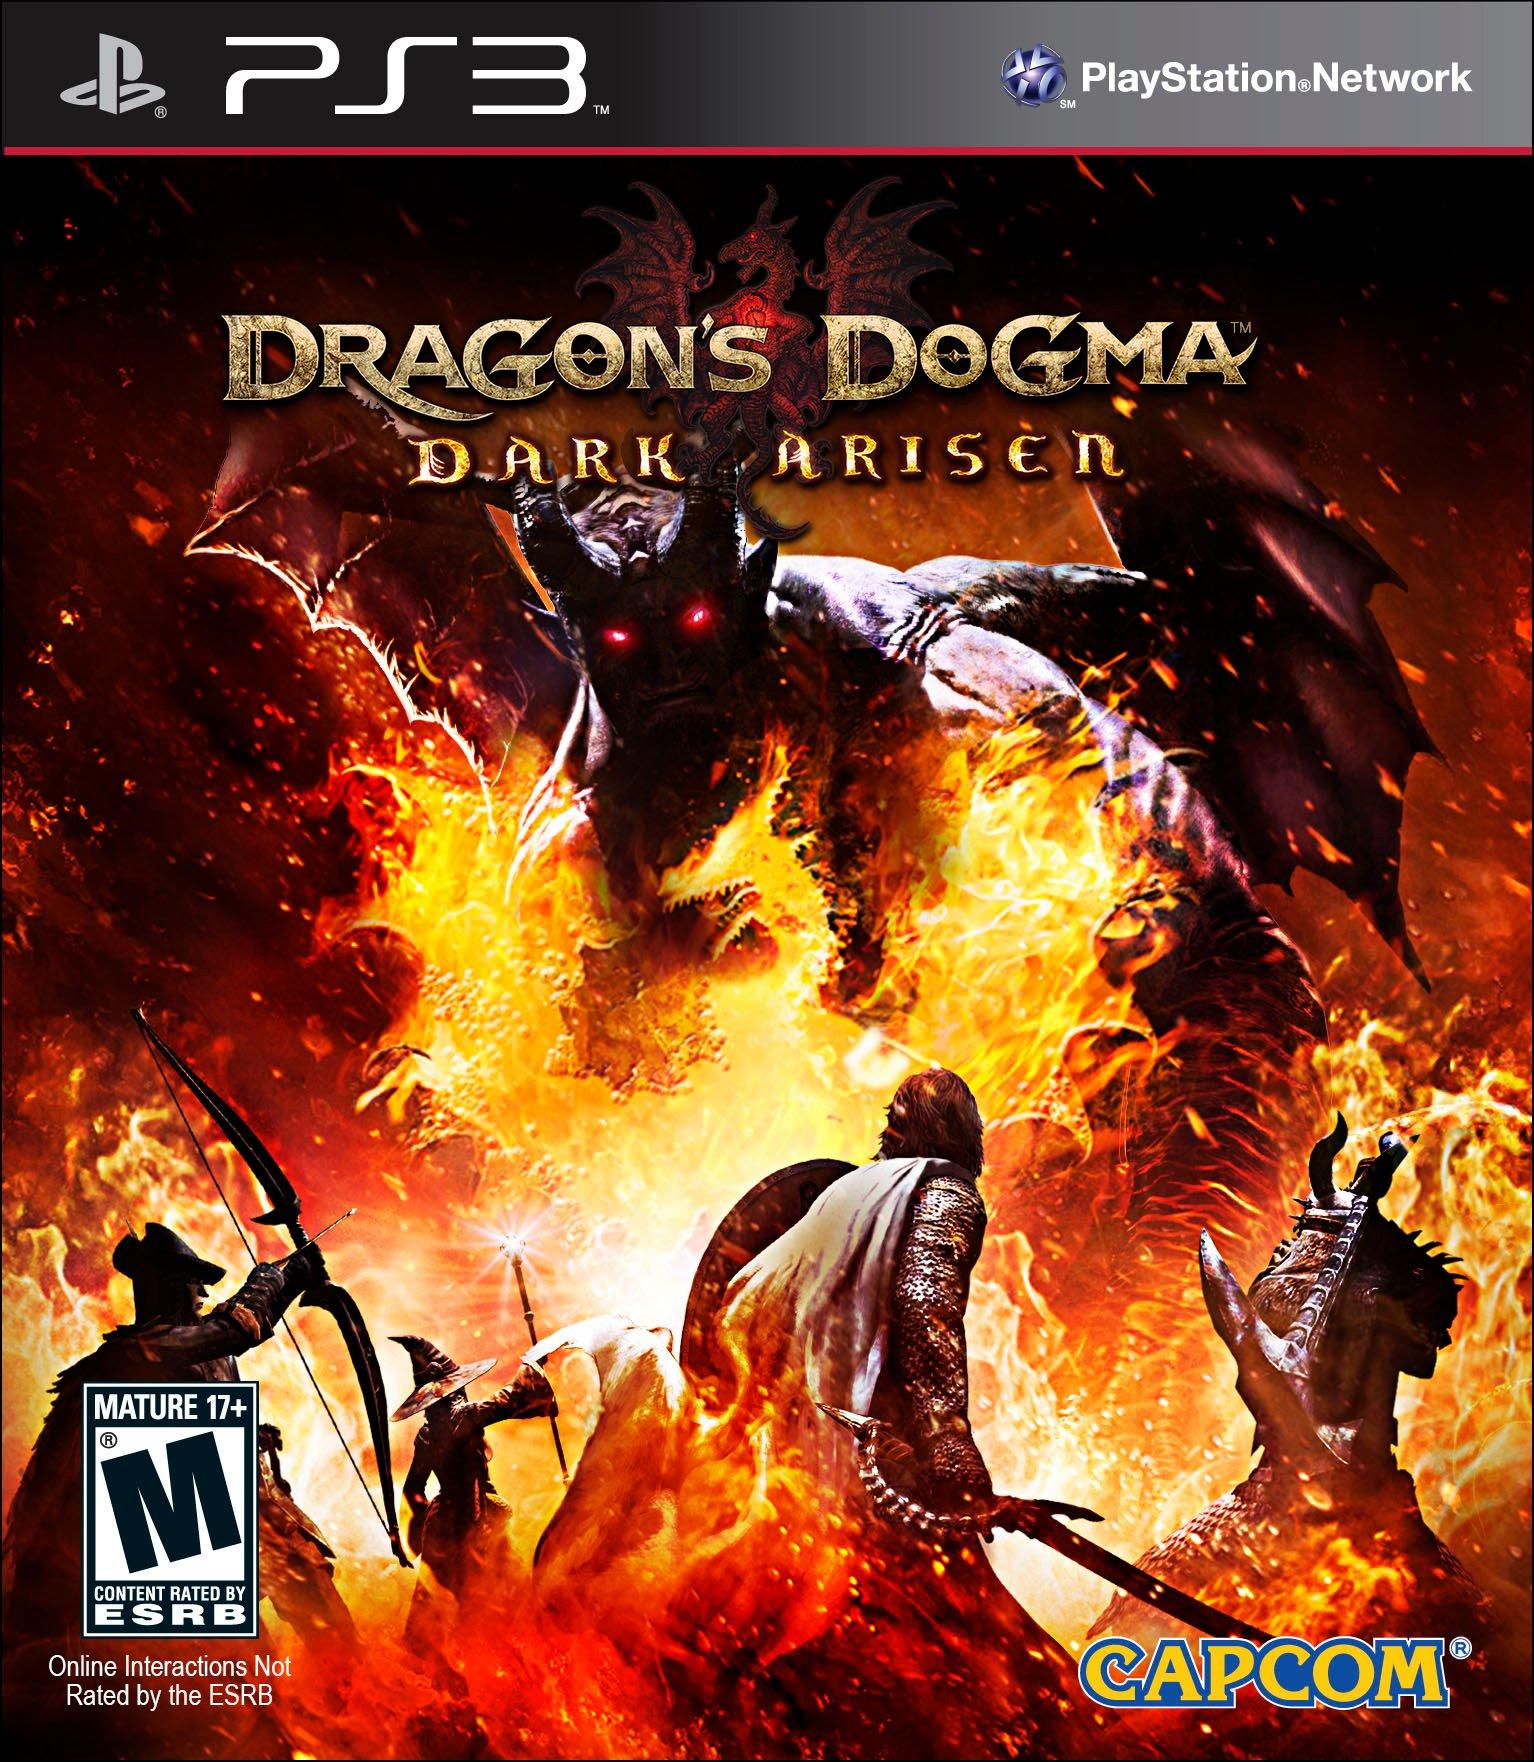 Dragon's Dogma - Playstation 3